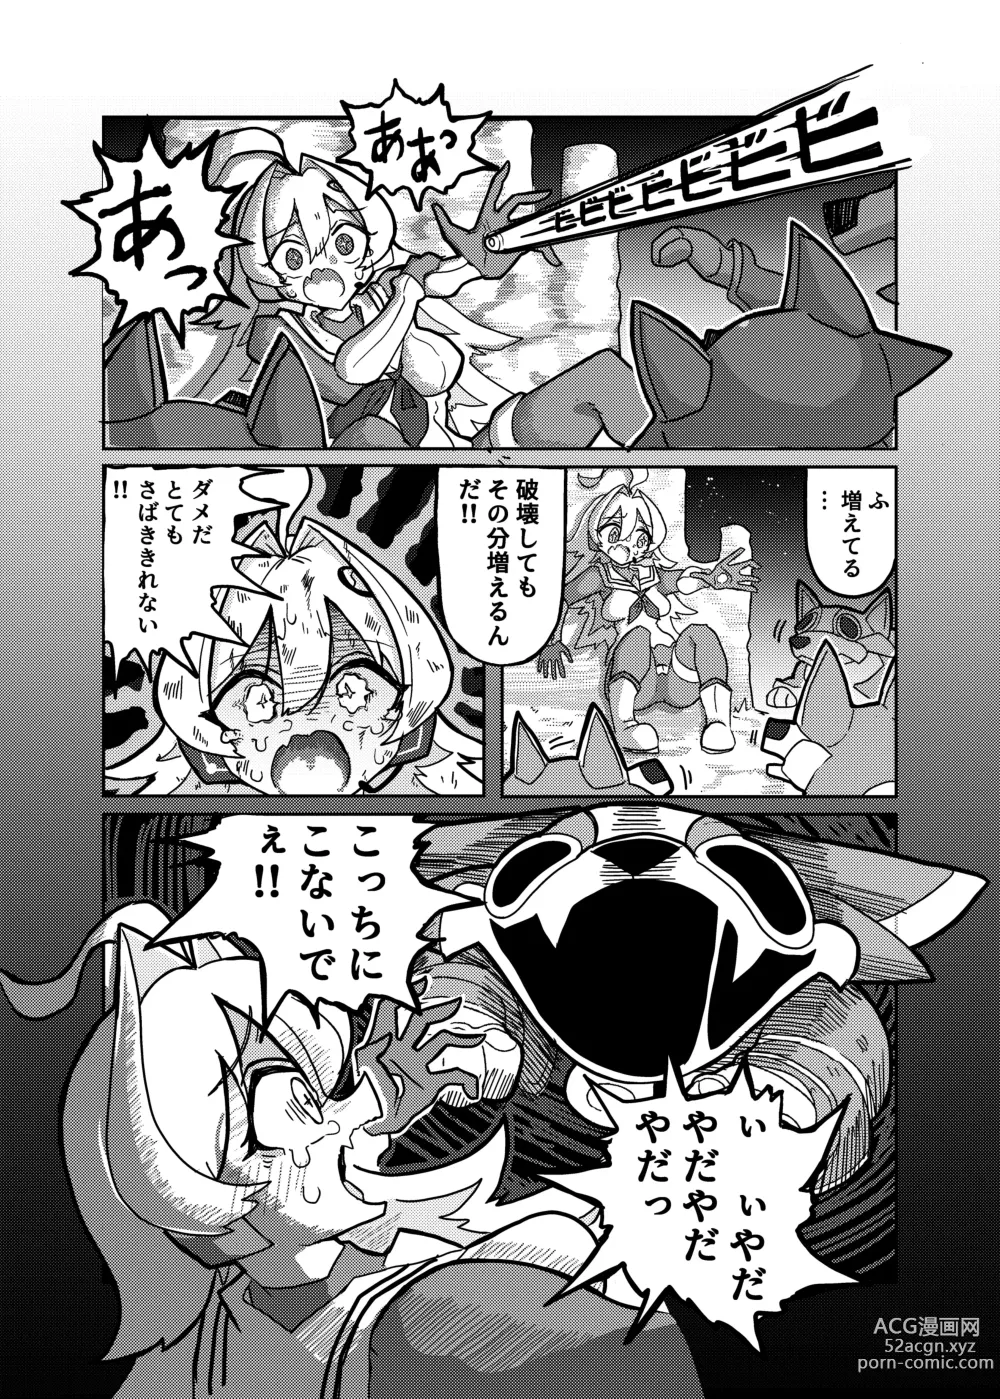 Page 19 of doujinshi Ralmia vs Robopup